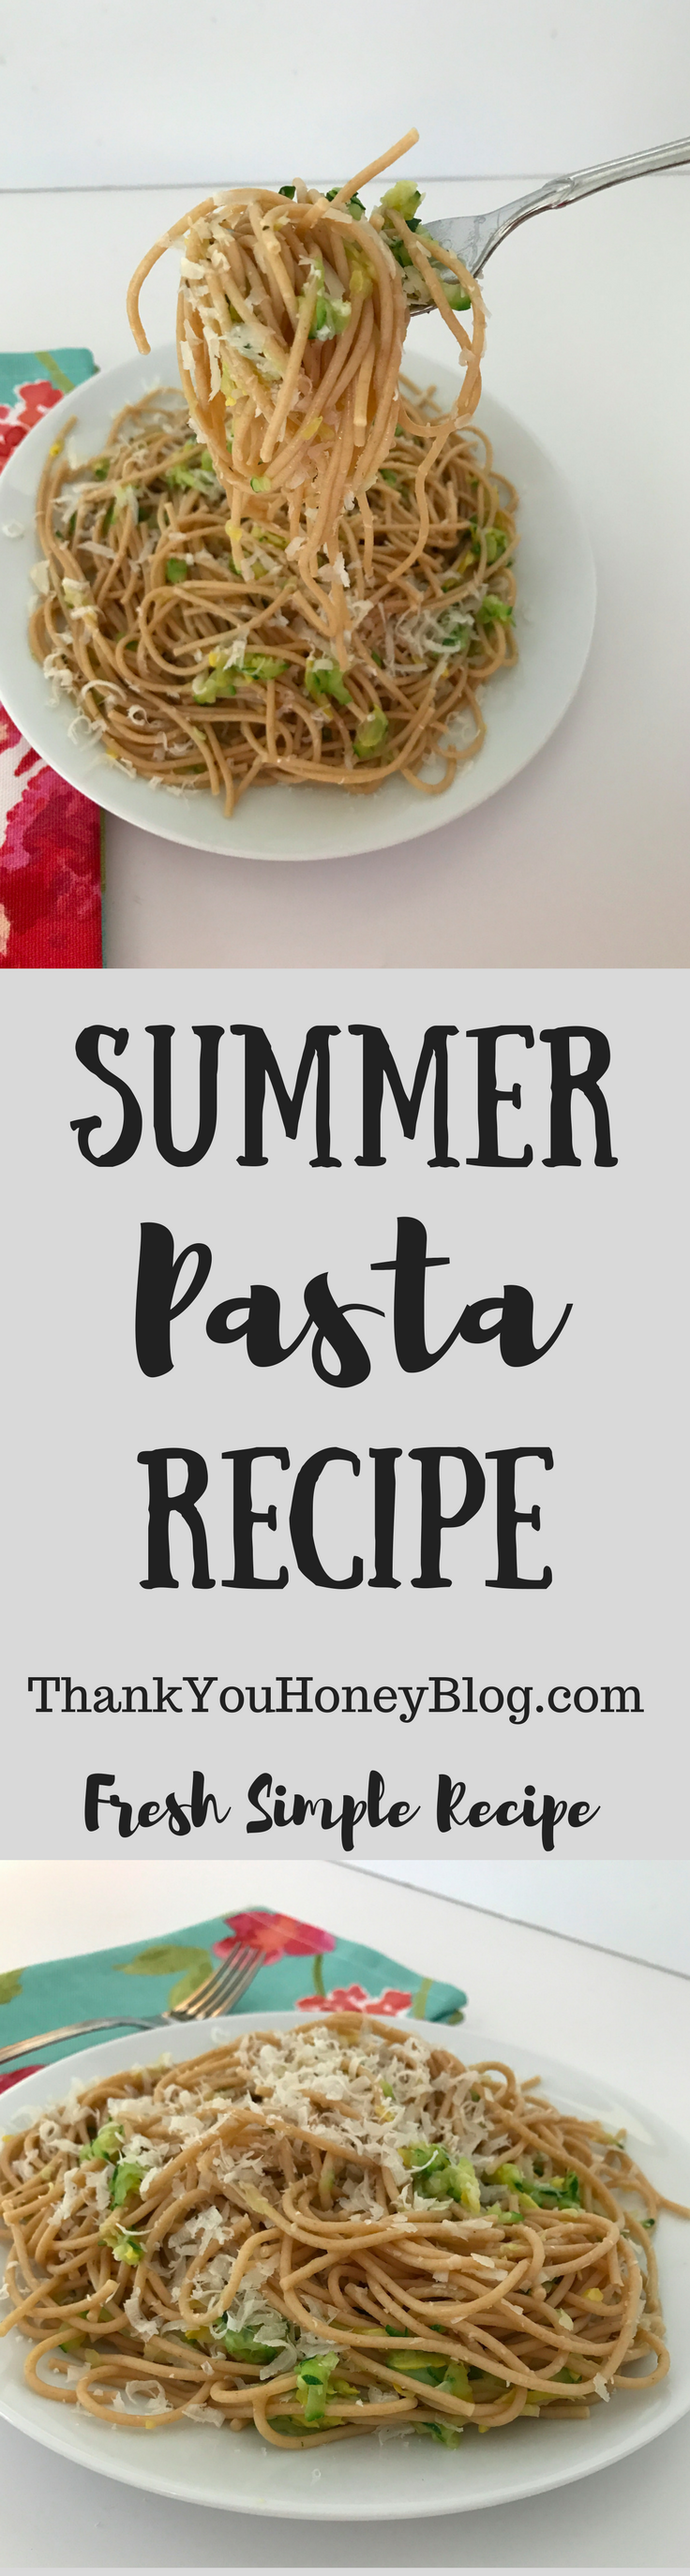 Summer Pasta Recipe, Recipe, Dinner, Main Dish, Pasta, Simple Meals, Clean Eating, Healthy, Summer, Healthy Meals, Supper, Pasta Night, Tutorial, ThankYouHoneyBlog.com